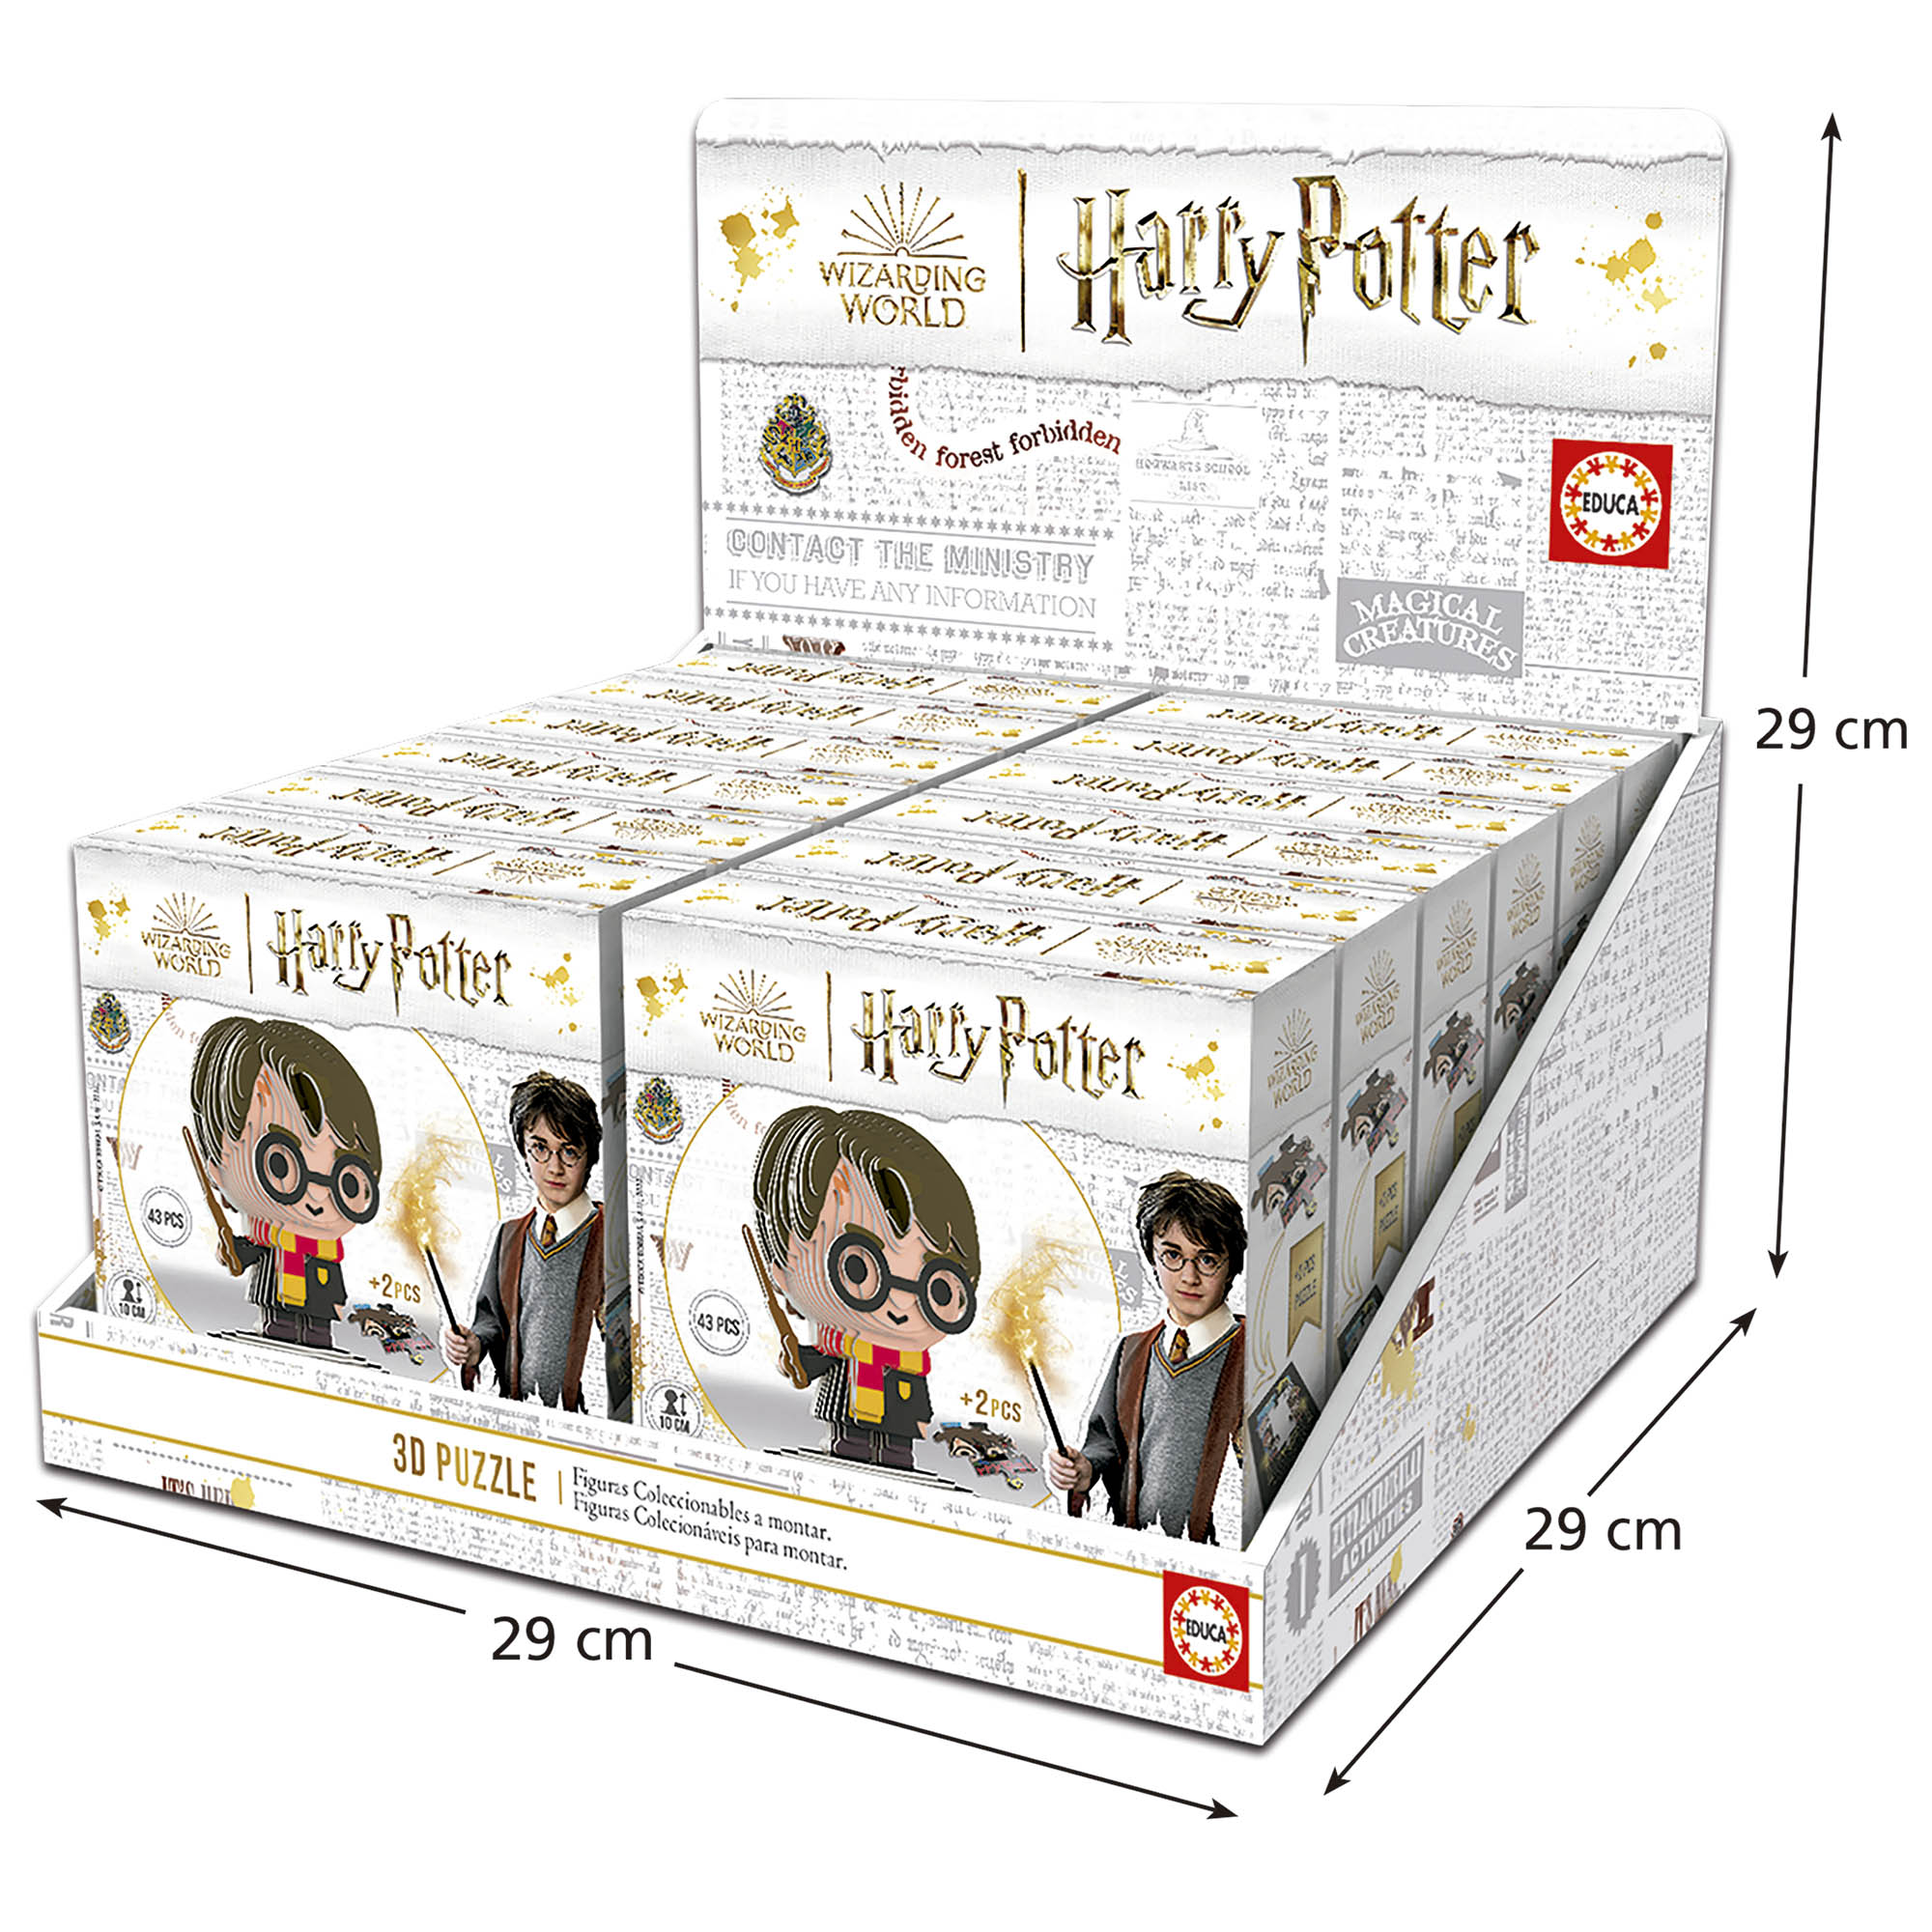 Display Puzles Mini Figures 3D Harry Potter